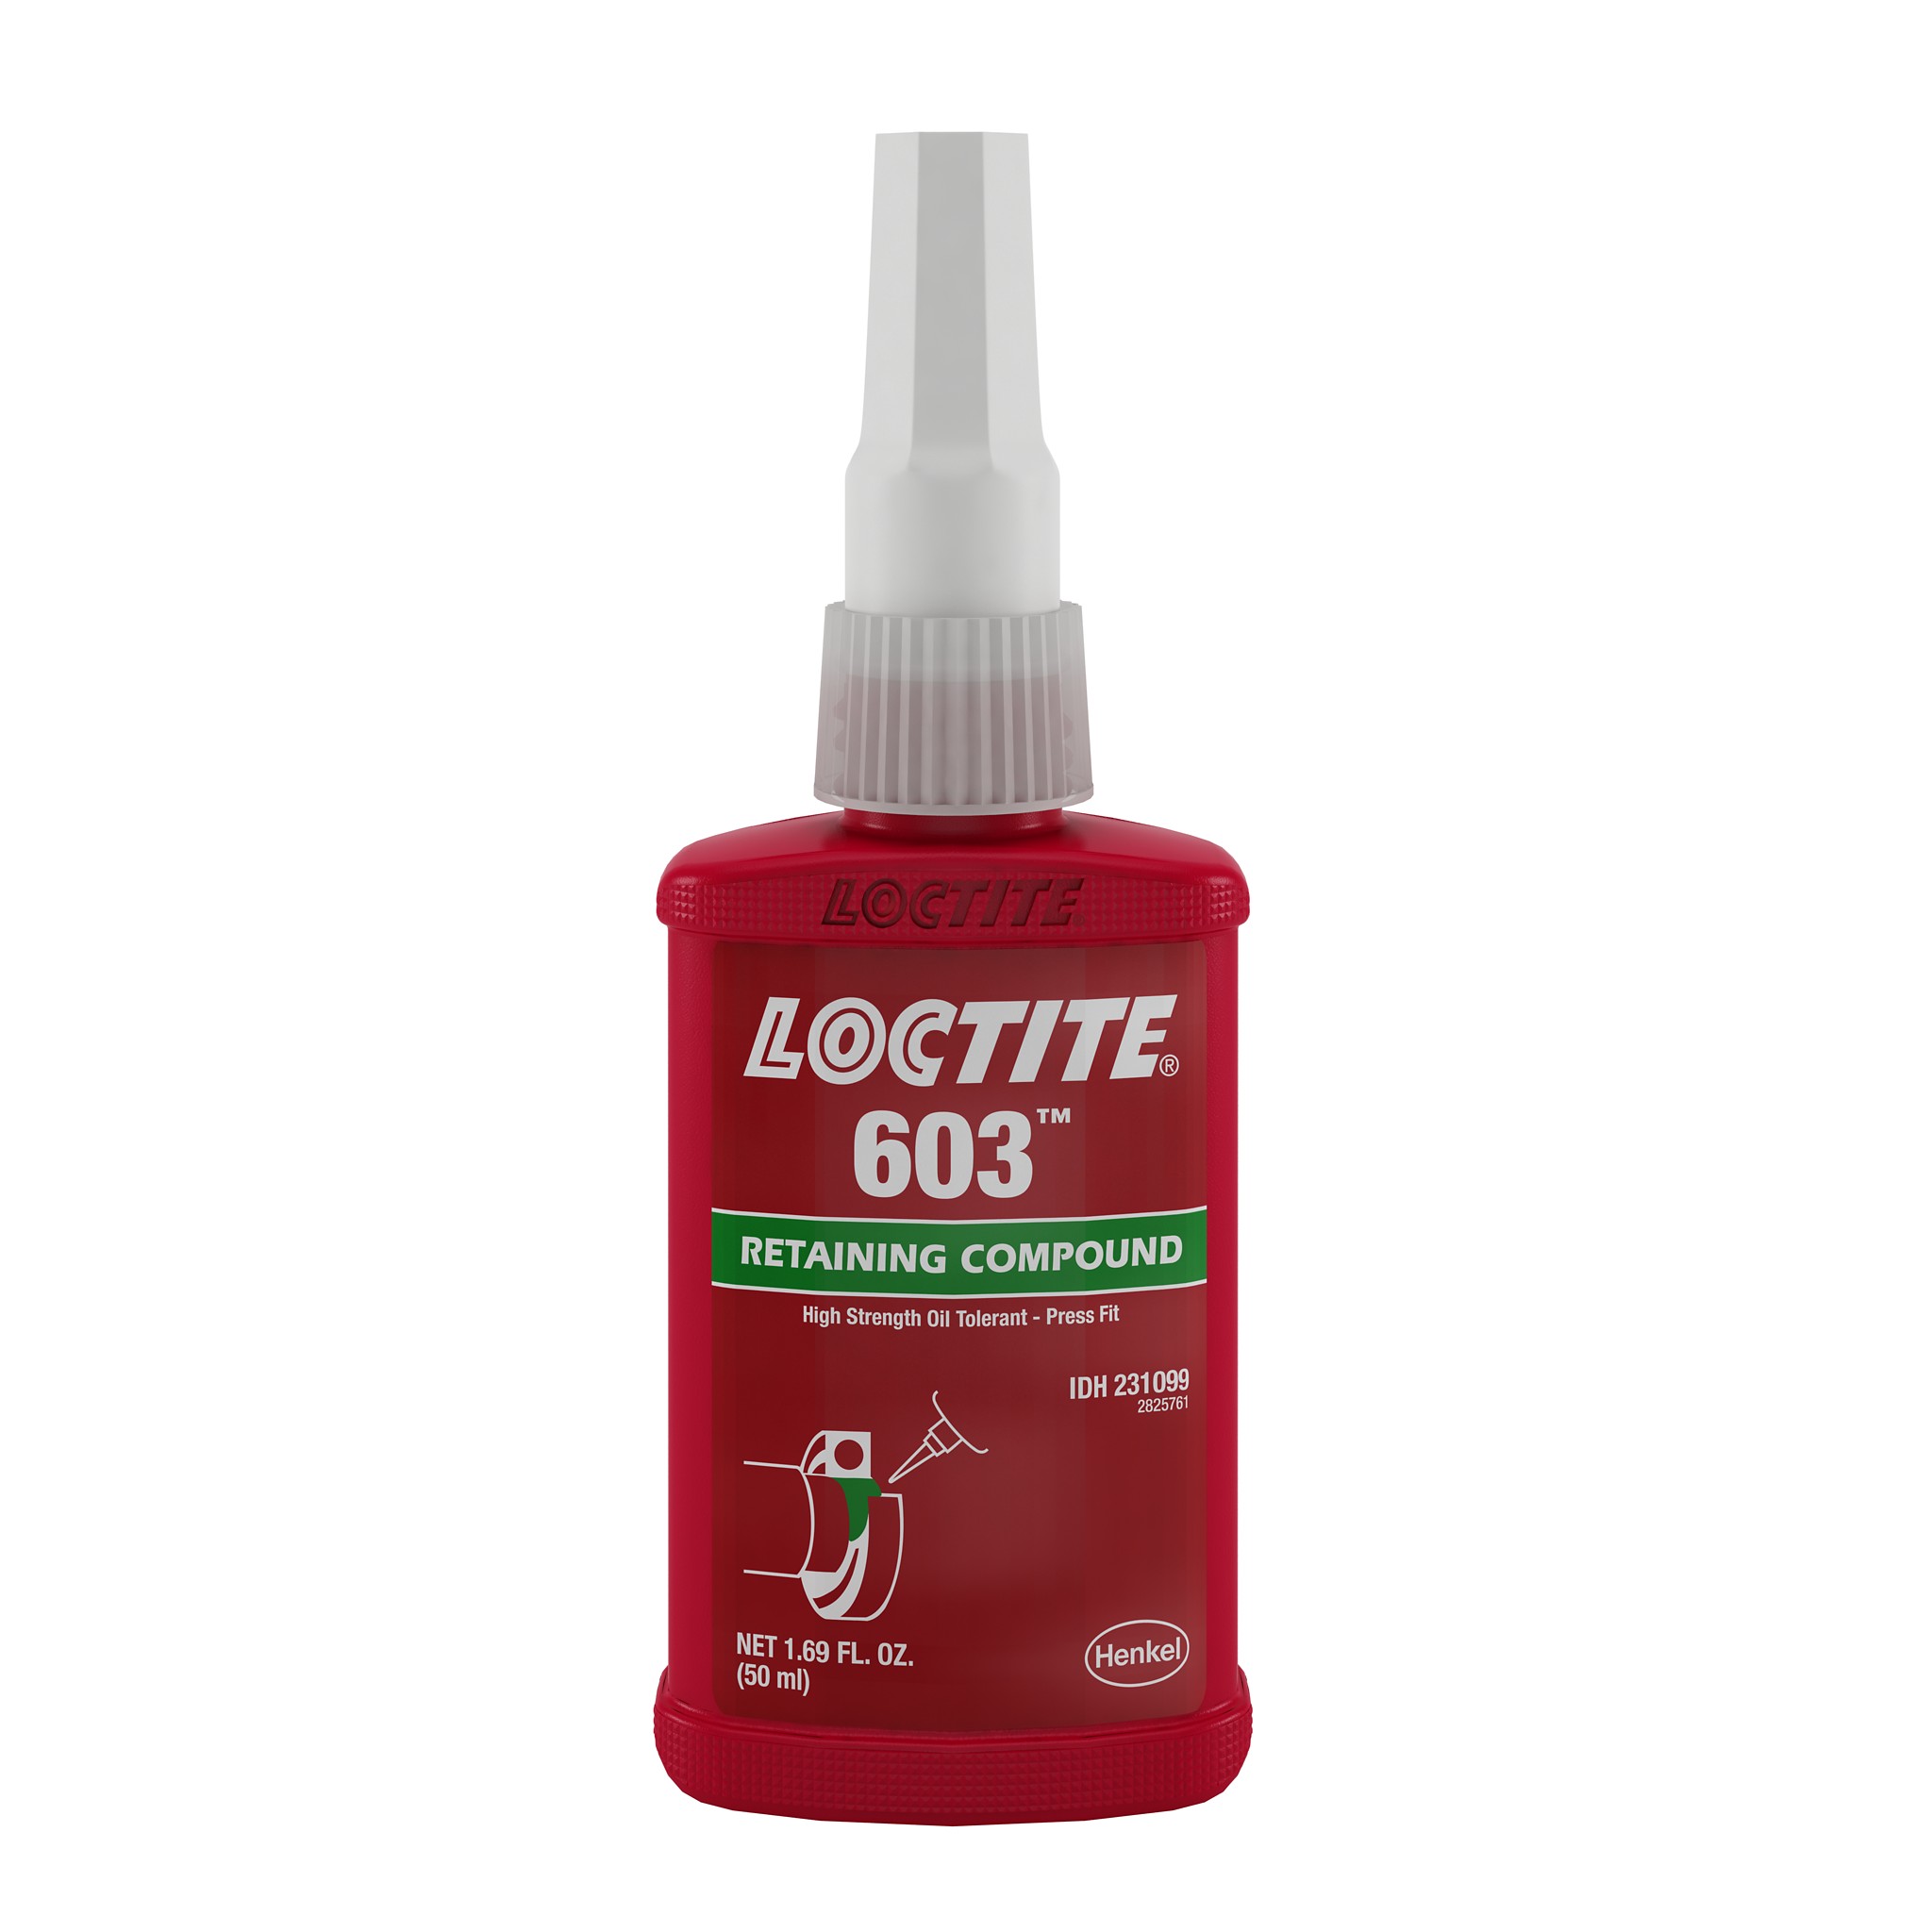 LOCTITE 603 - はめ合い用接着剤 - 高強度タイプ - ヘンケルの接着剤